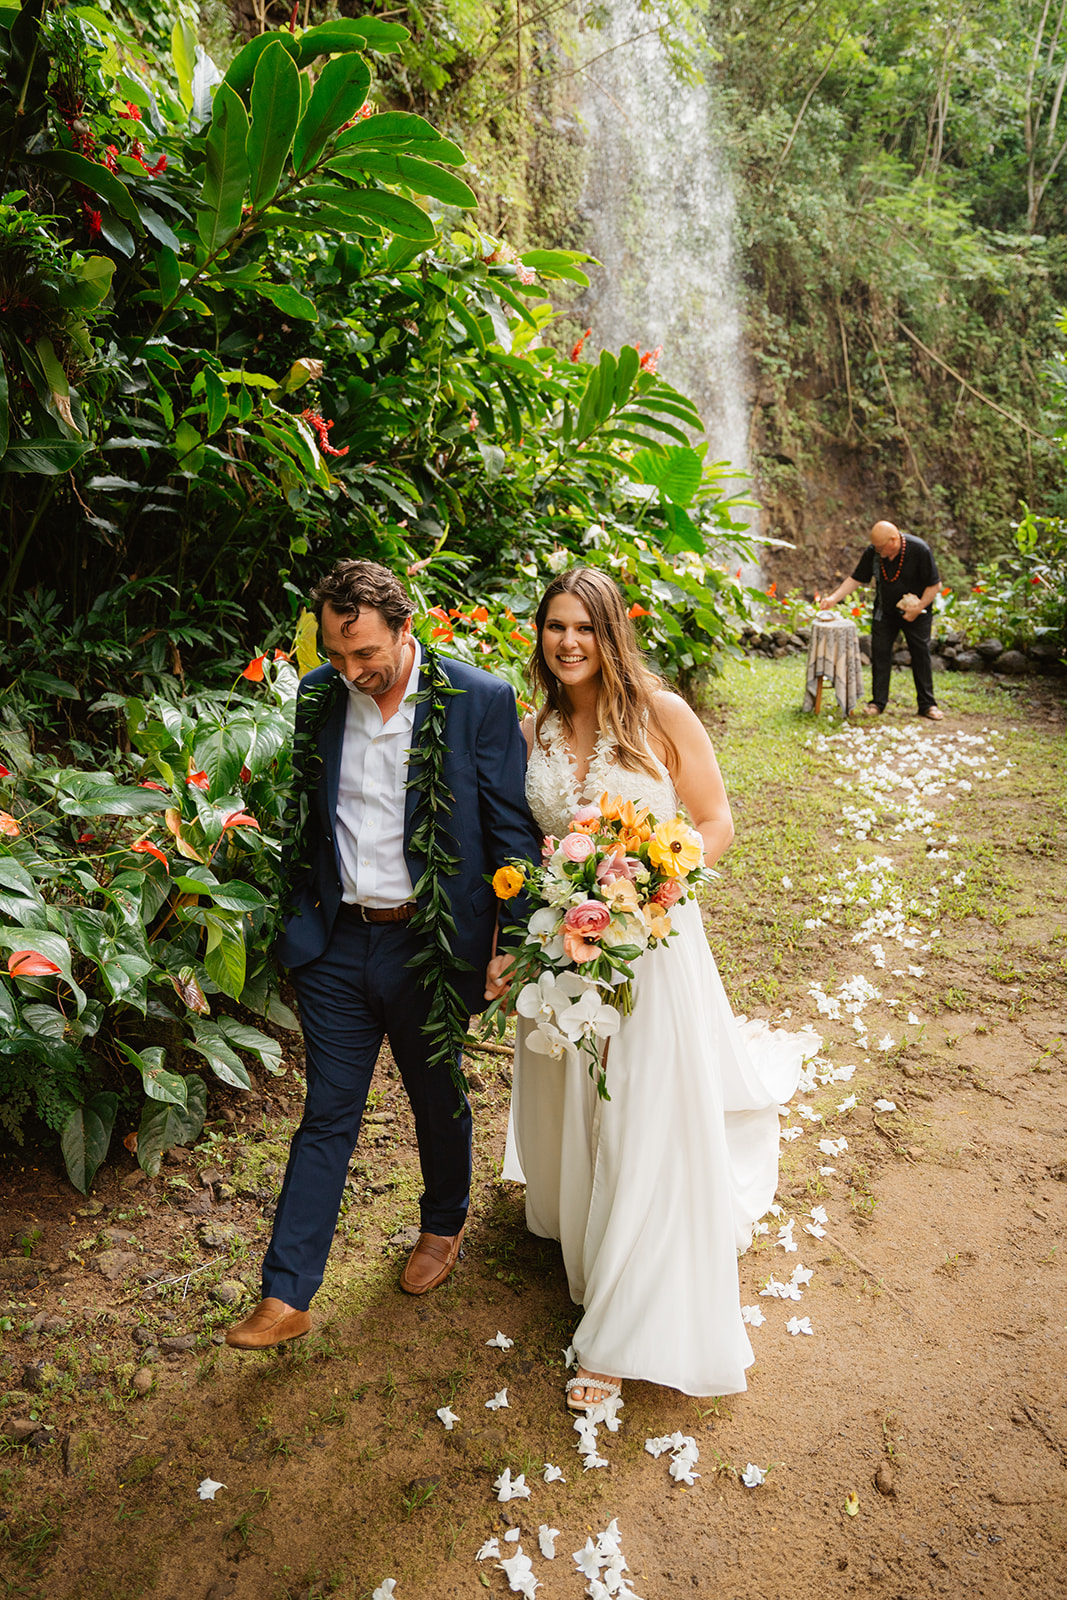 Kauai waterfall elopement